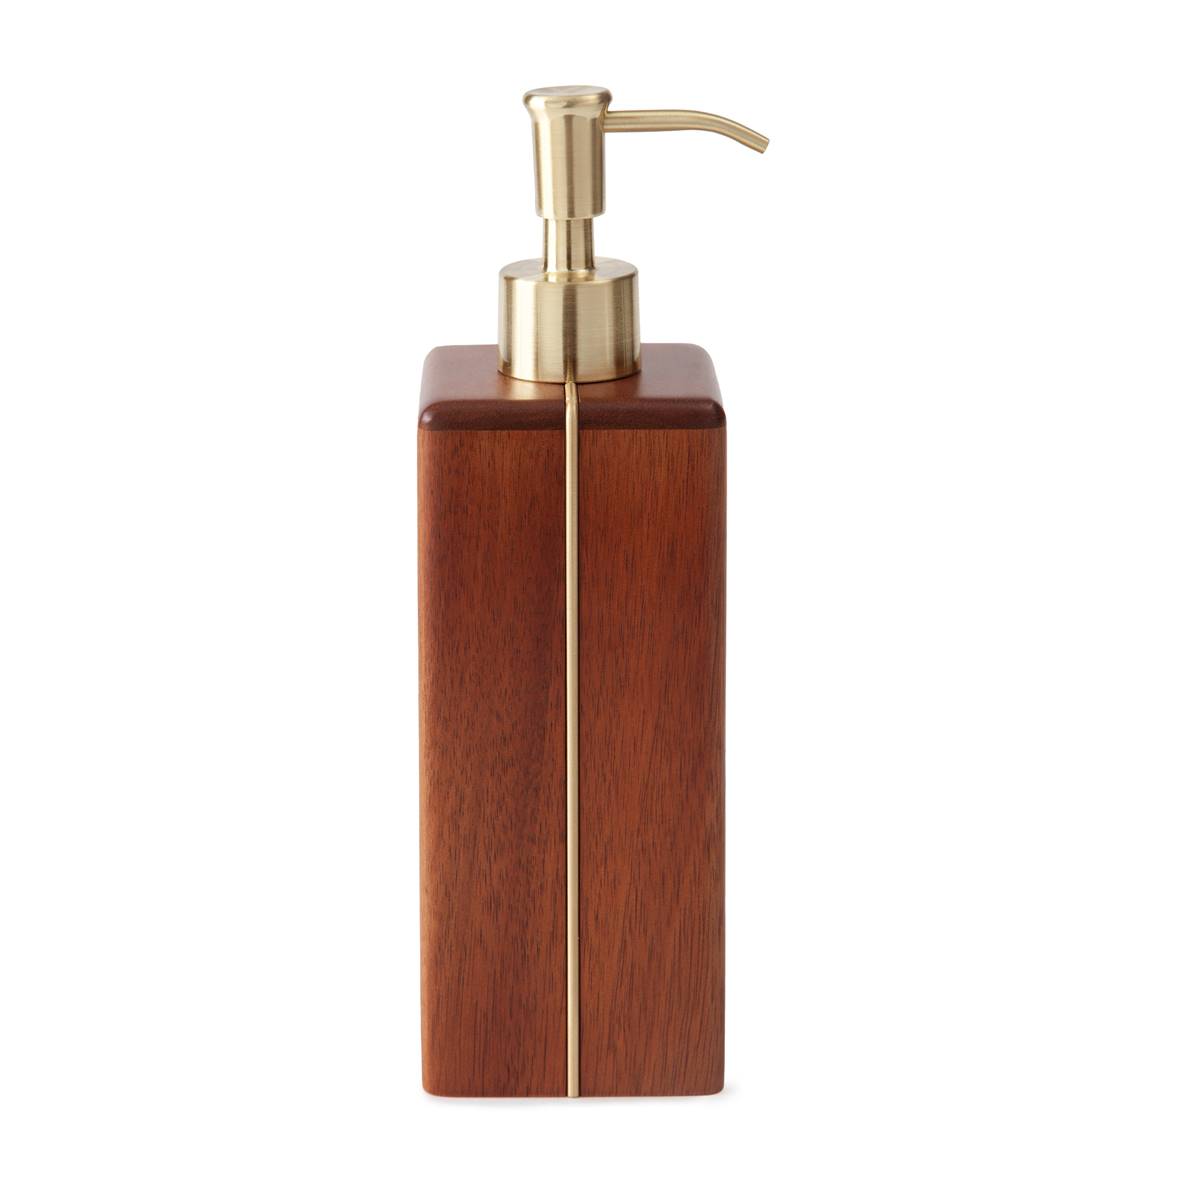 Cassadecor Soho Bath Accessories - Lotion Dispenser